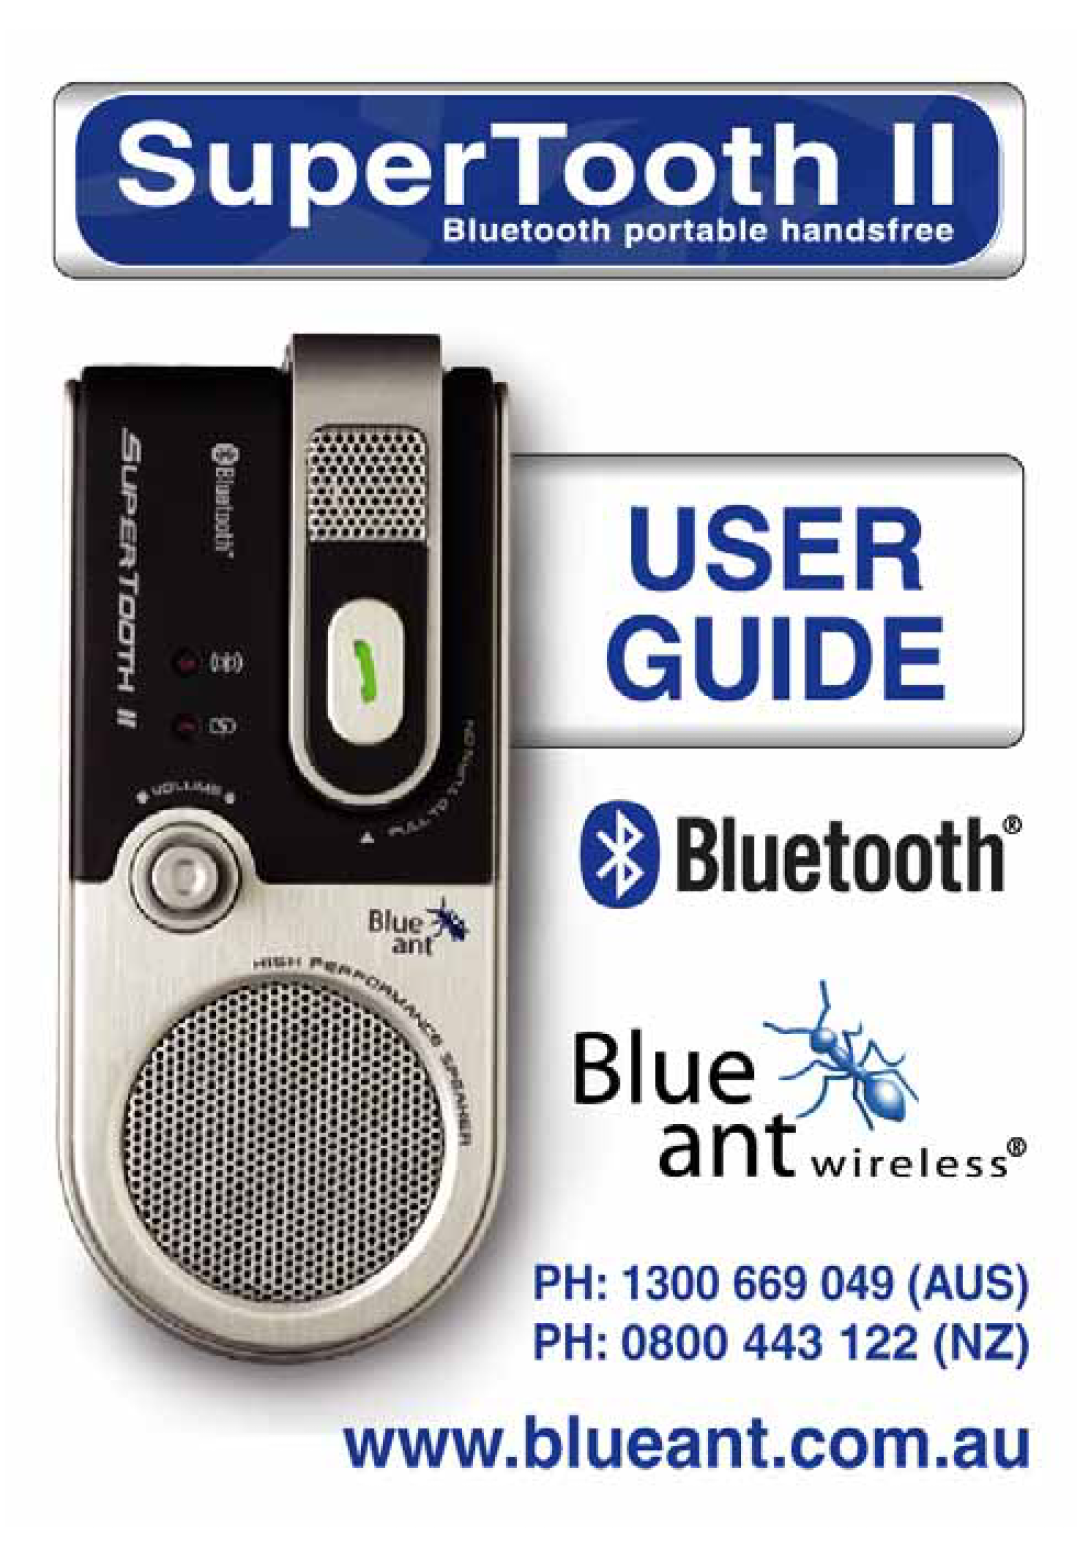 BlueAnt Wireless SUPERTOOTH II manual 